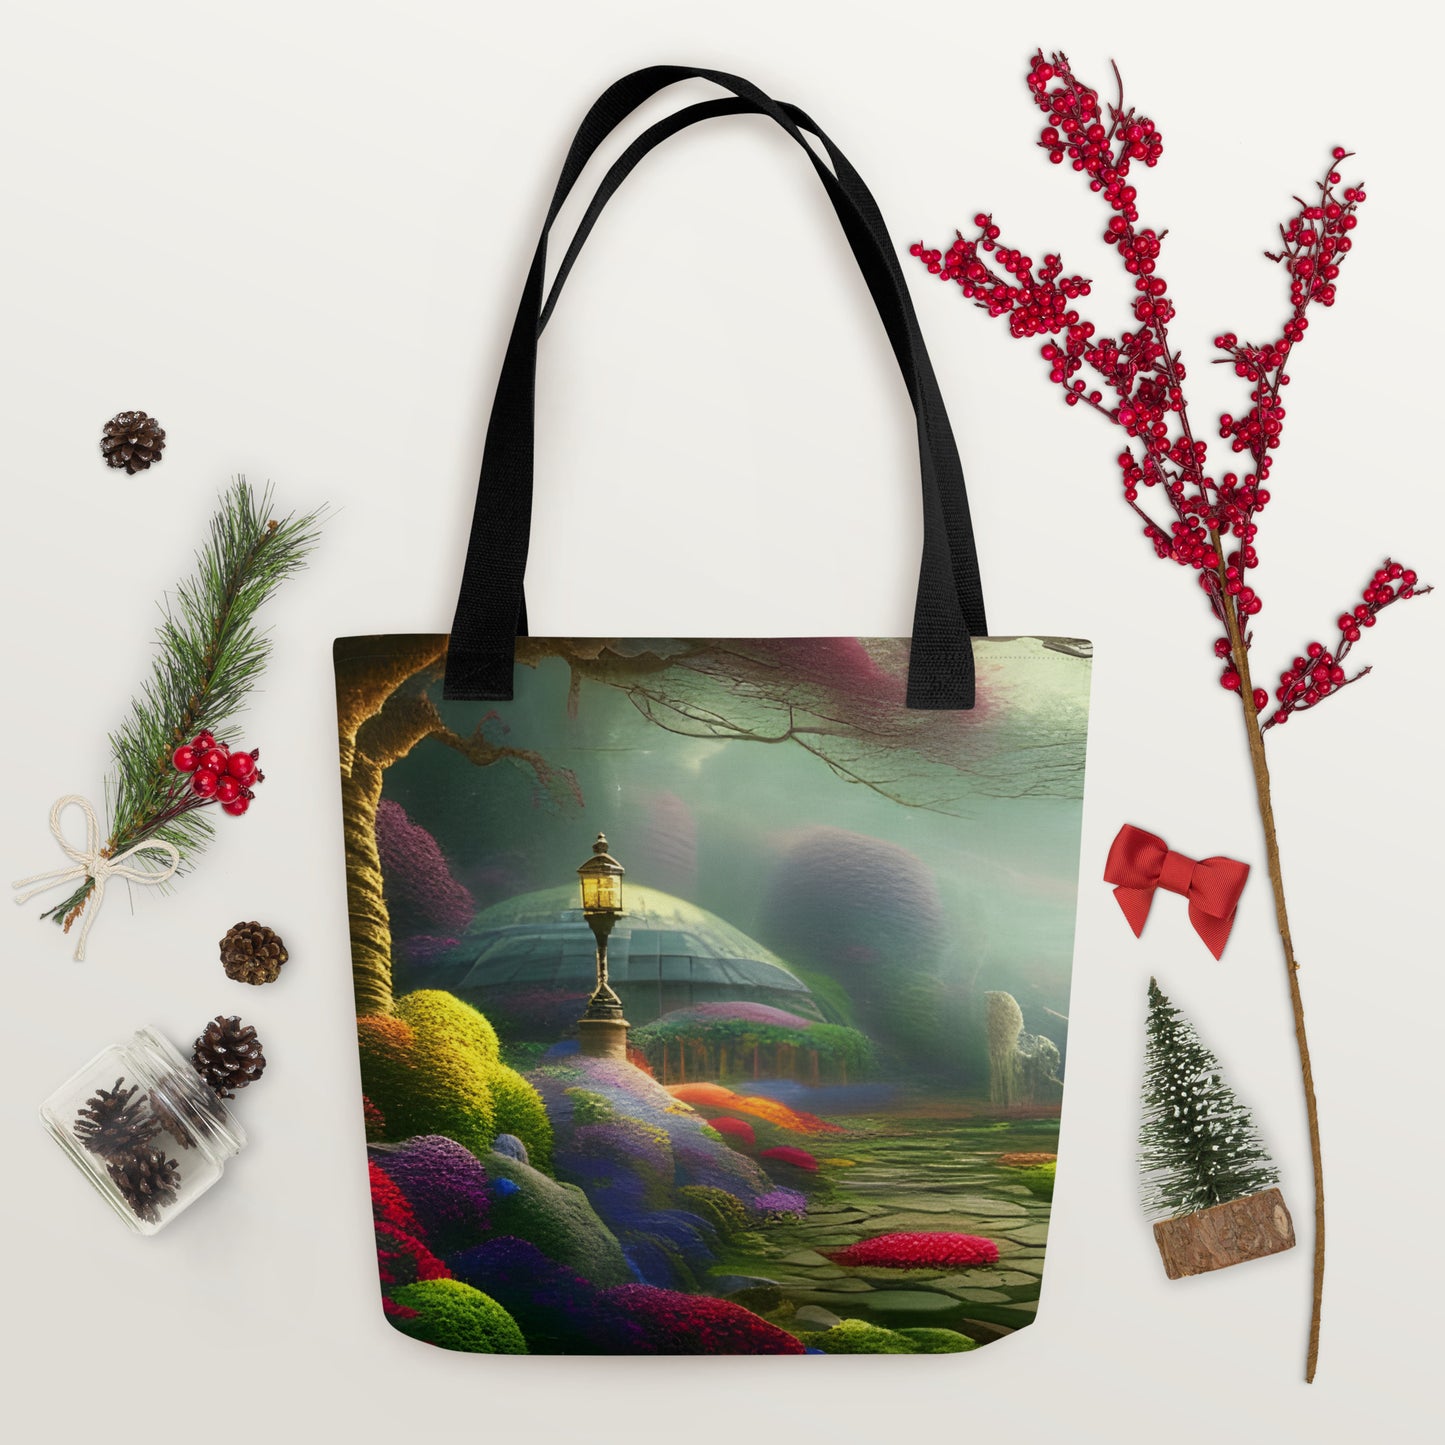 "Fantasy Garden" Tote Bag